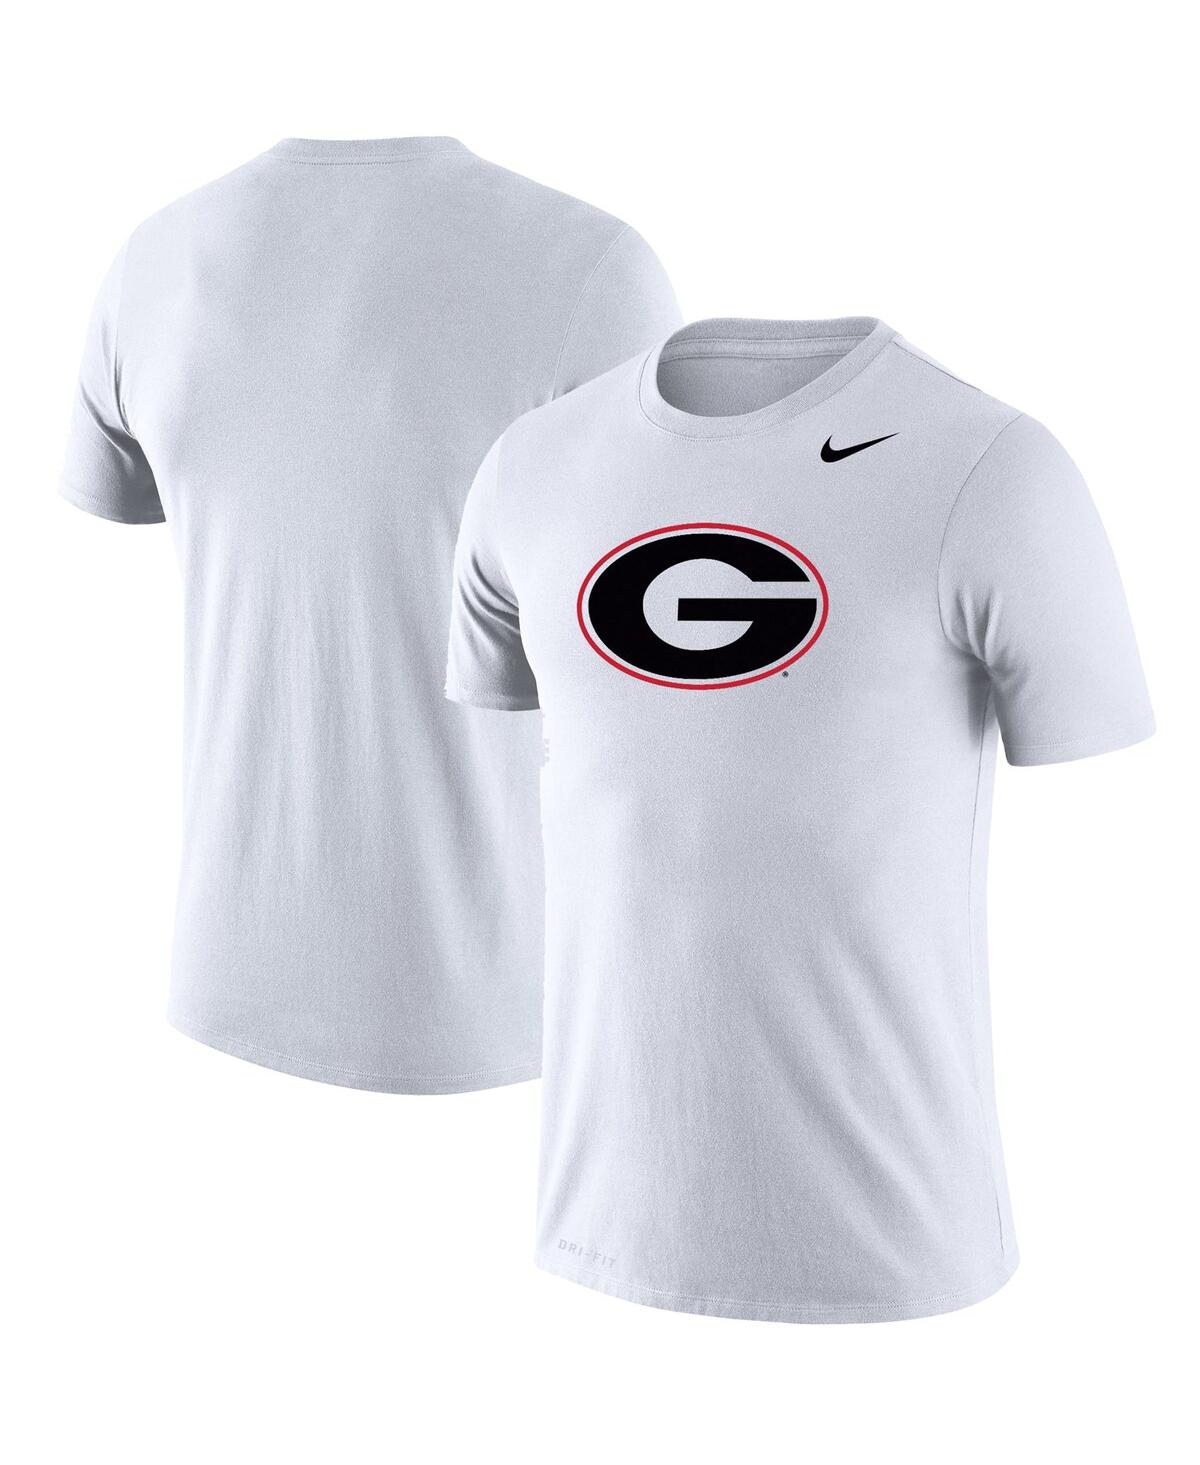 Men's Nike White Georgia Bulldogs School Logo Legend Performance T-shirt